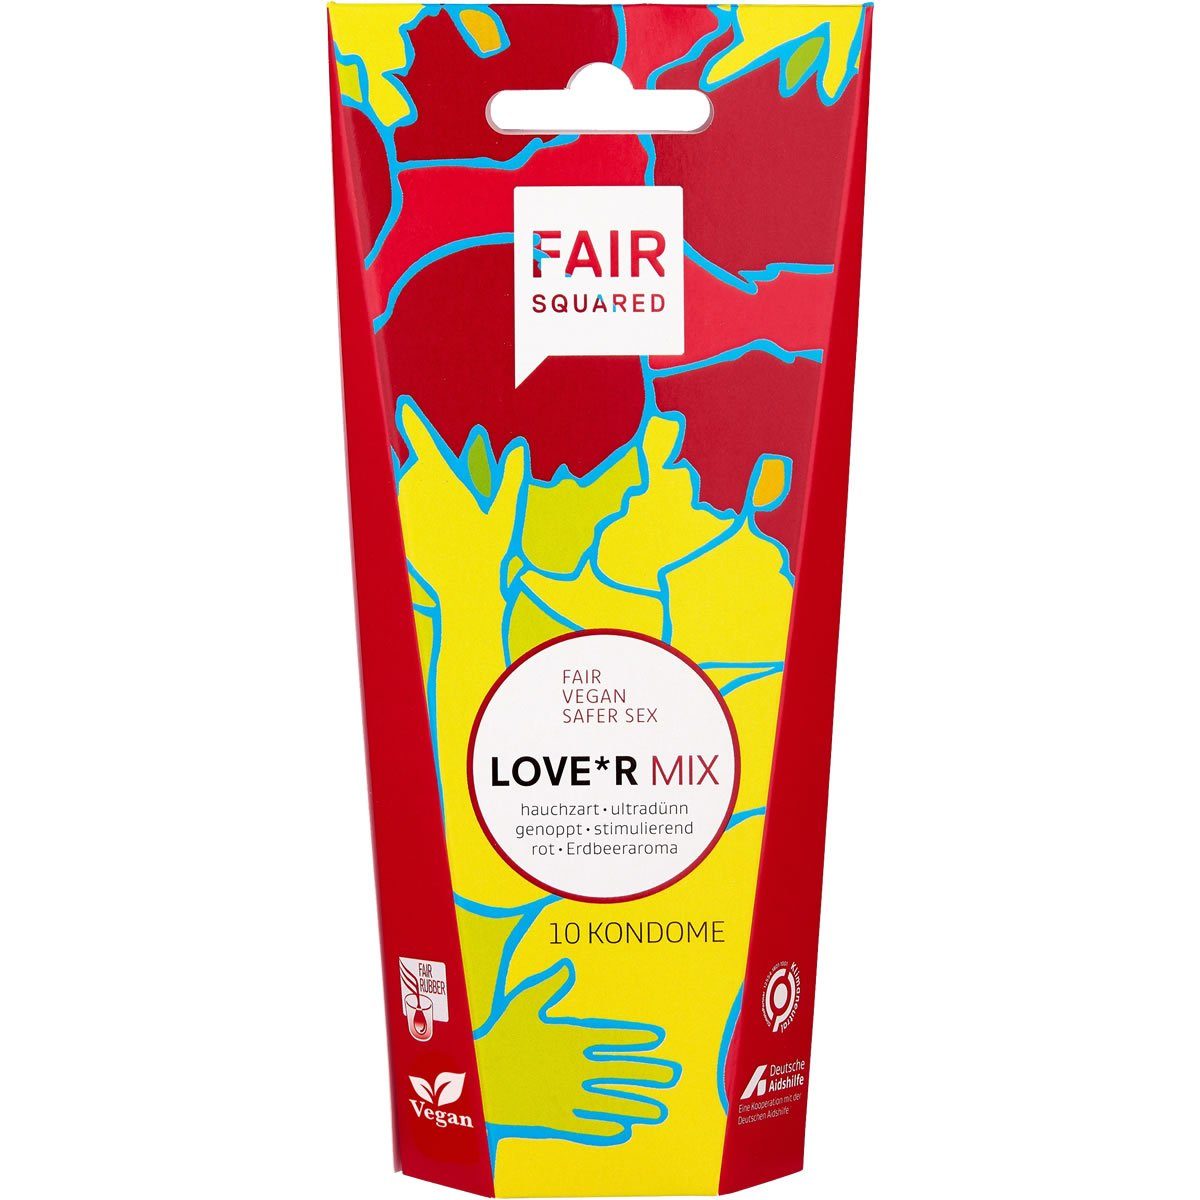 Celebrate St., Love*r im vegane Love Kondome - 10 Squared mit, Fair-Trade-Kondome Sortiment Mix Packung Fair your